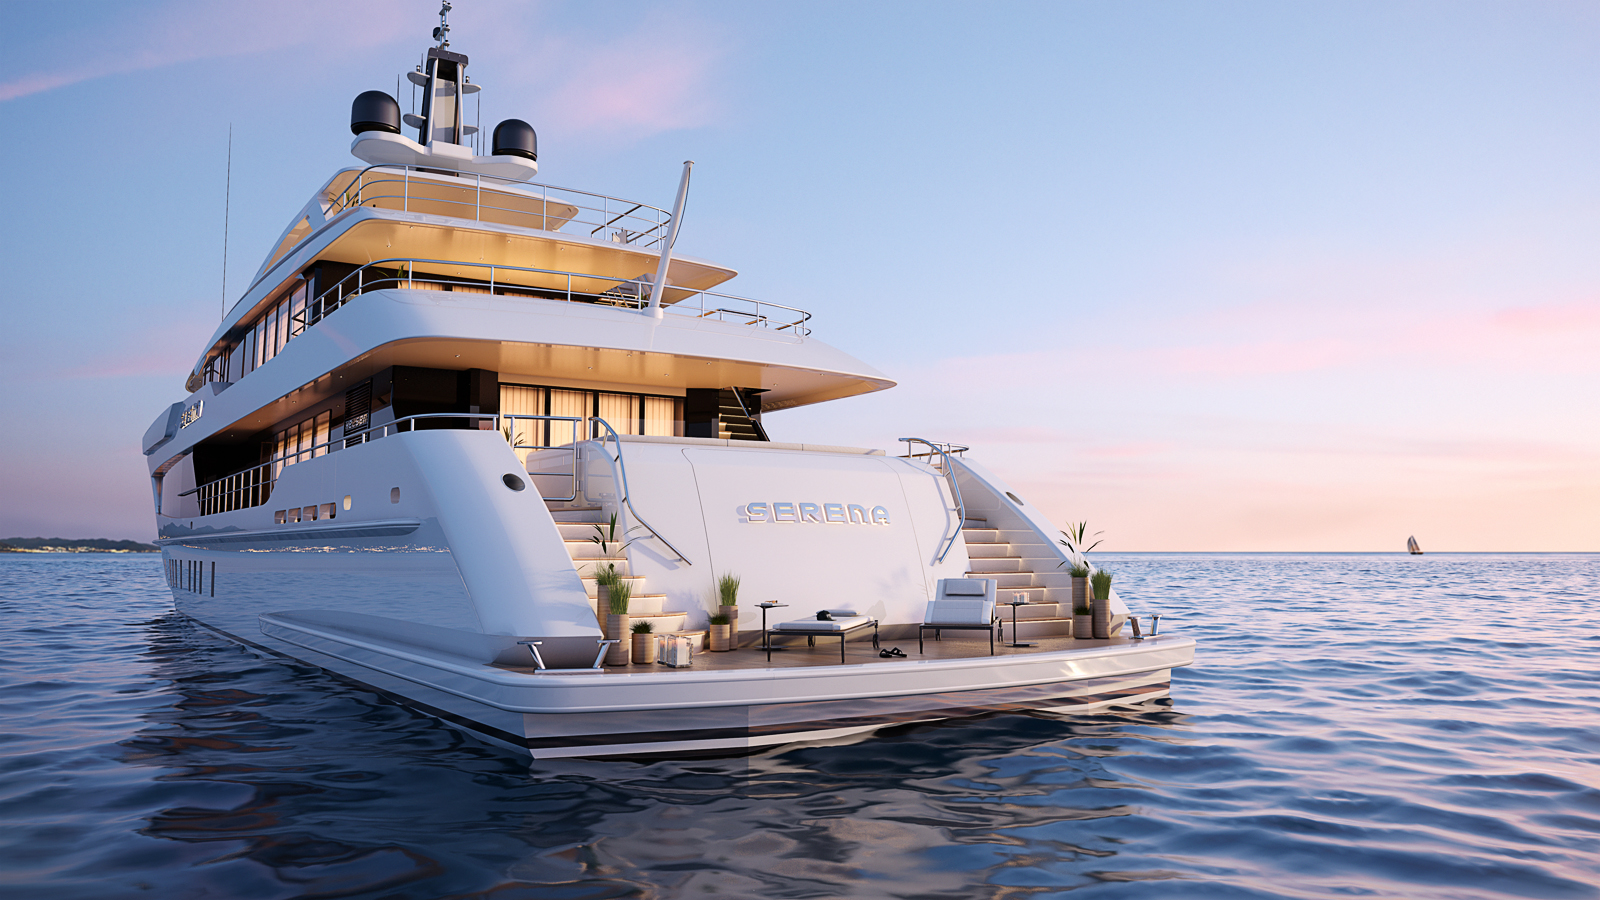 heesen yachts yachting superyacht interior exterior luxury luxurious buy sale